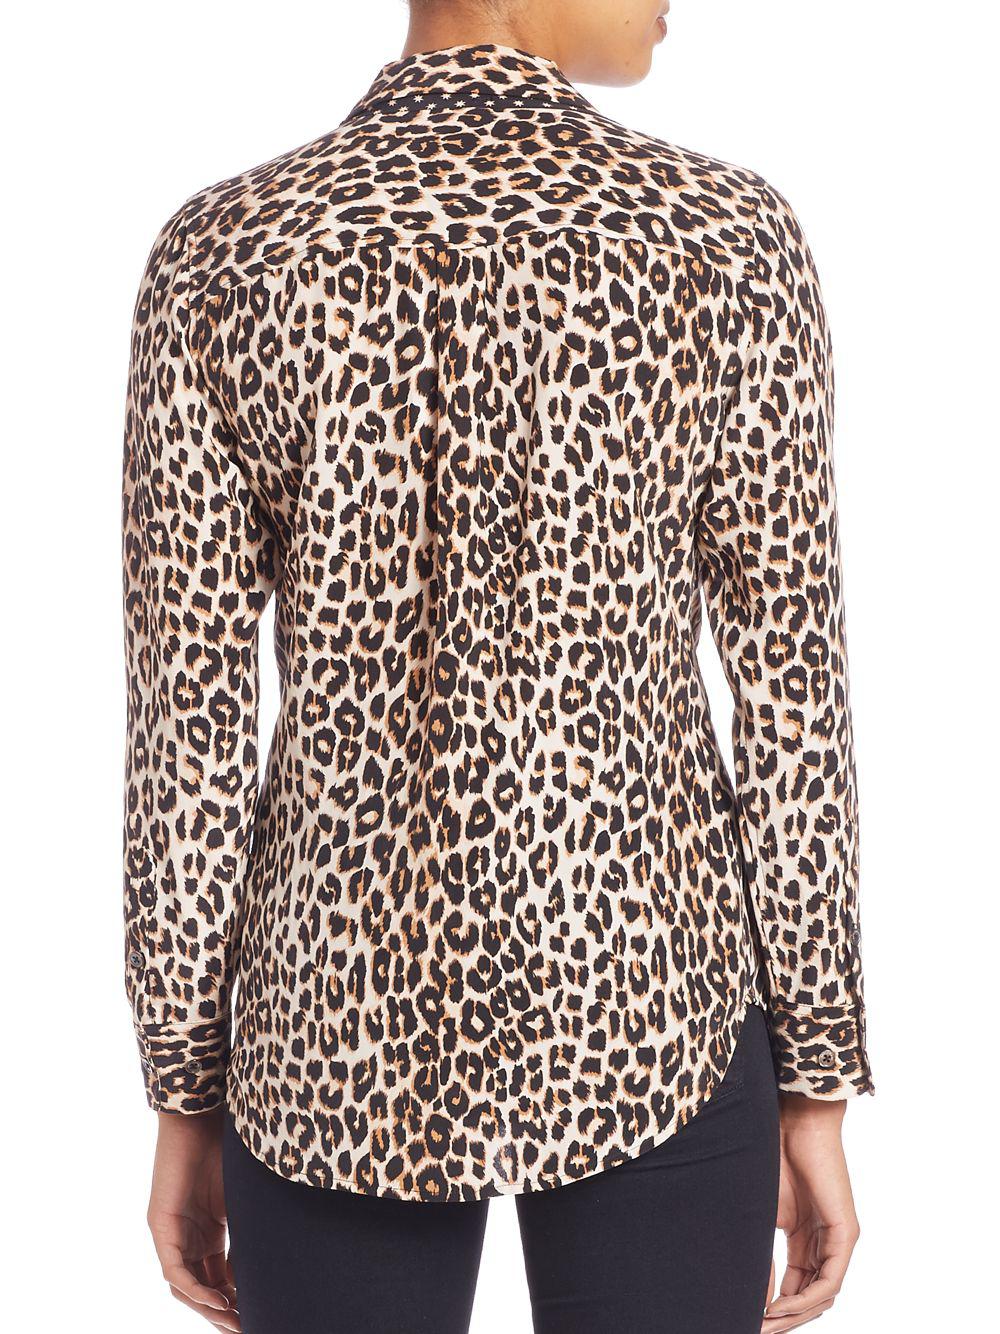 Equipment Kate Moss For Leopard-print Silk Blouse - Lyst